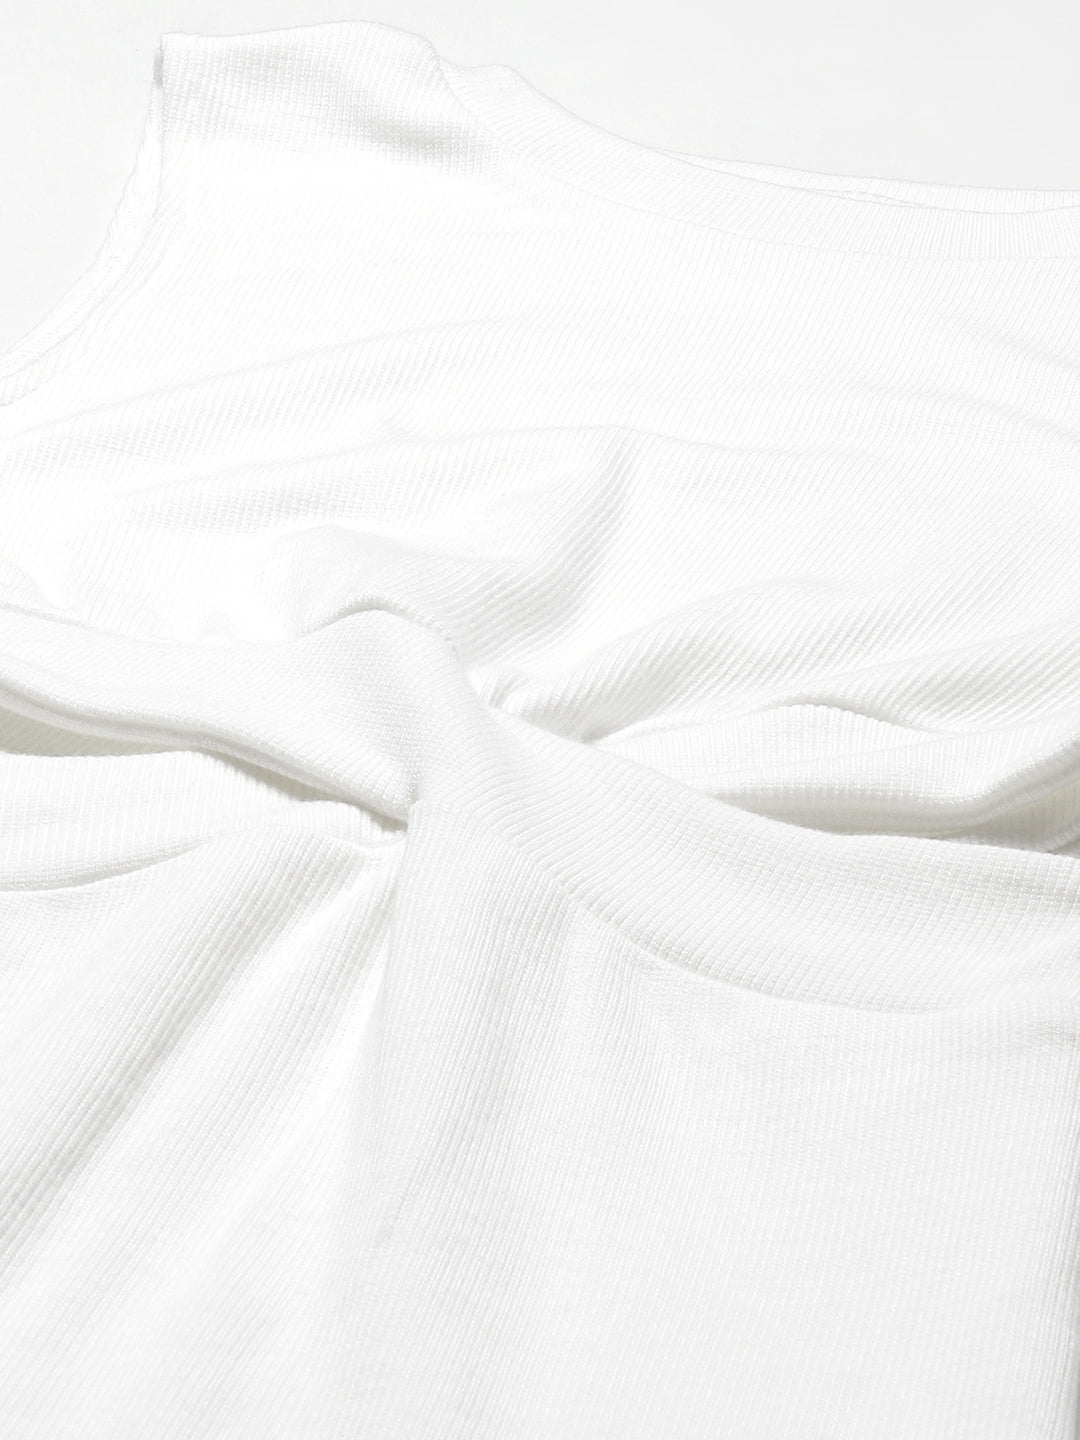 White Rib Side Cut-Out Bodycon Dress